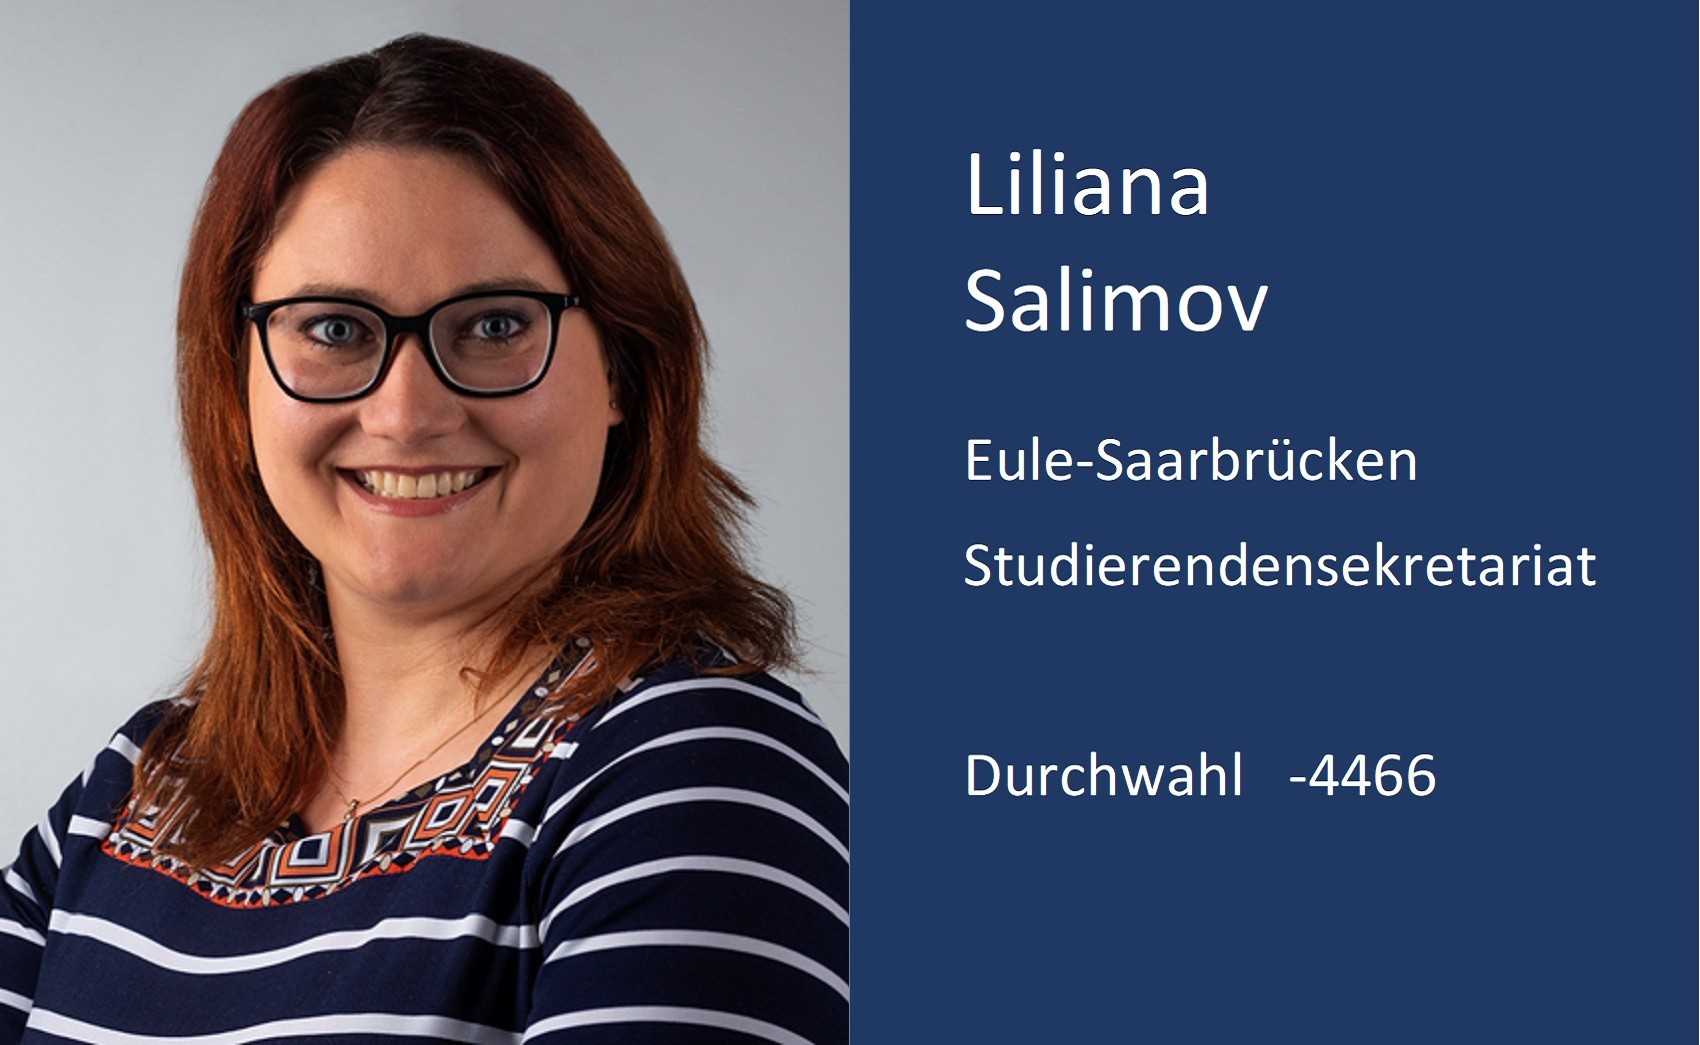 Liliana Salimov, Kontaktdaten, Durchwahl, 4 4 6 6, Email, liliana.salimov ät uni minus saarland . d e 